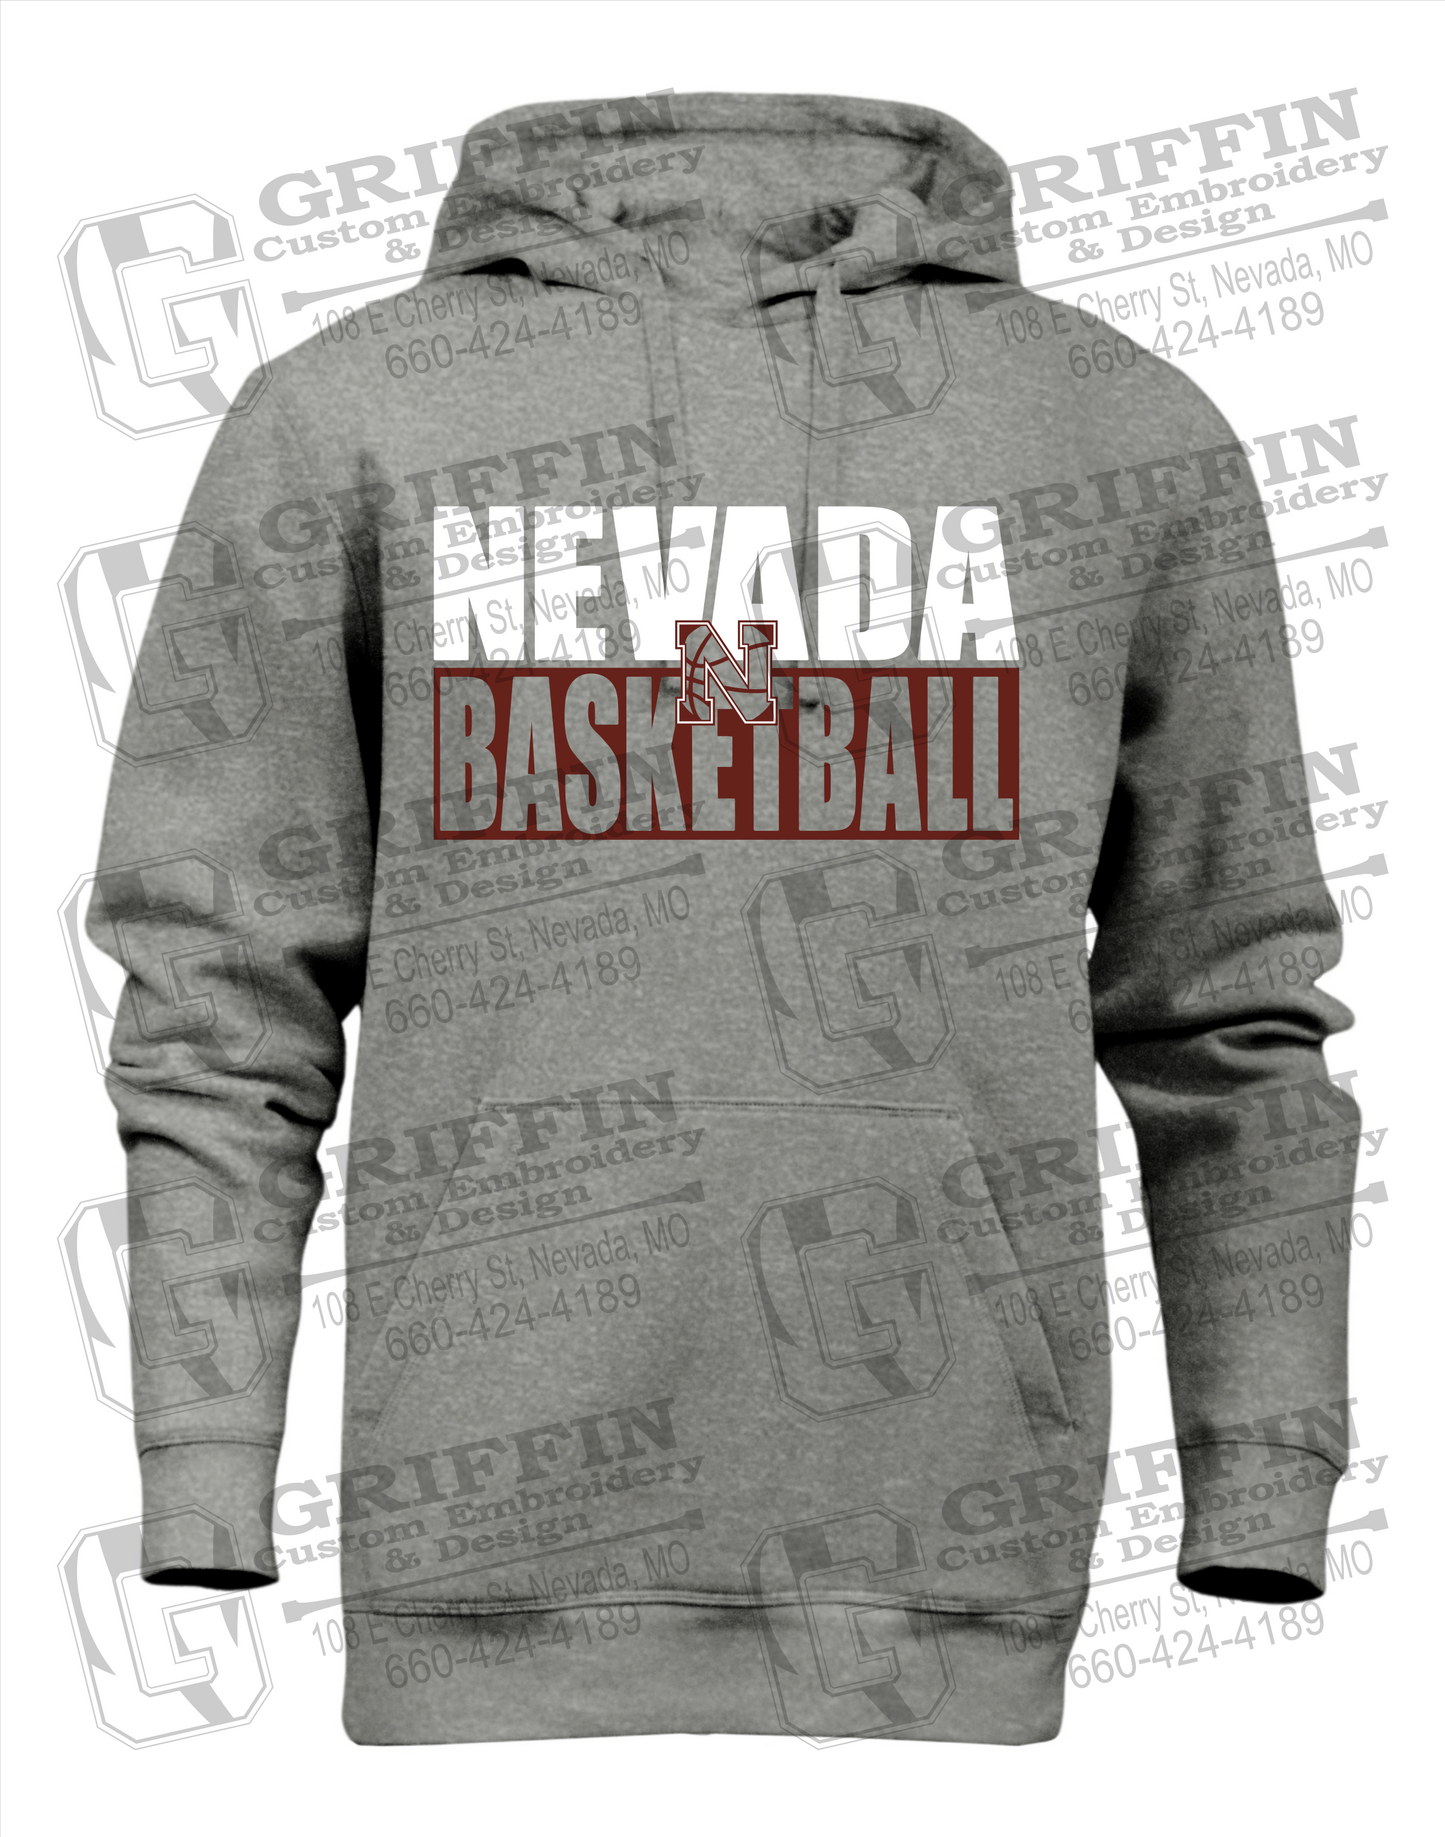 Nevada Tigers 21-Q Youth Heavyweight Hoodie - Basketball